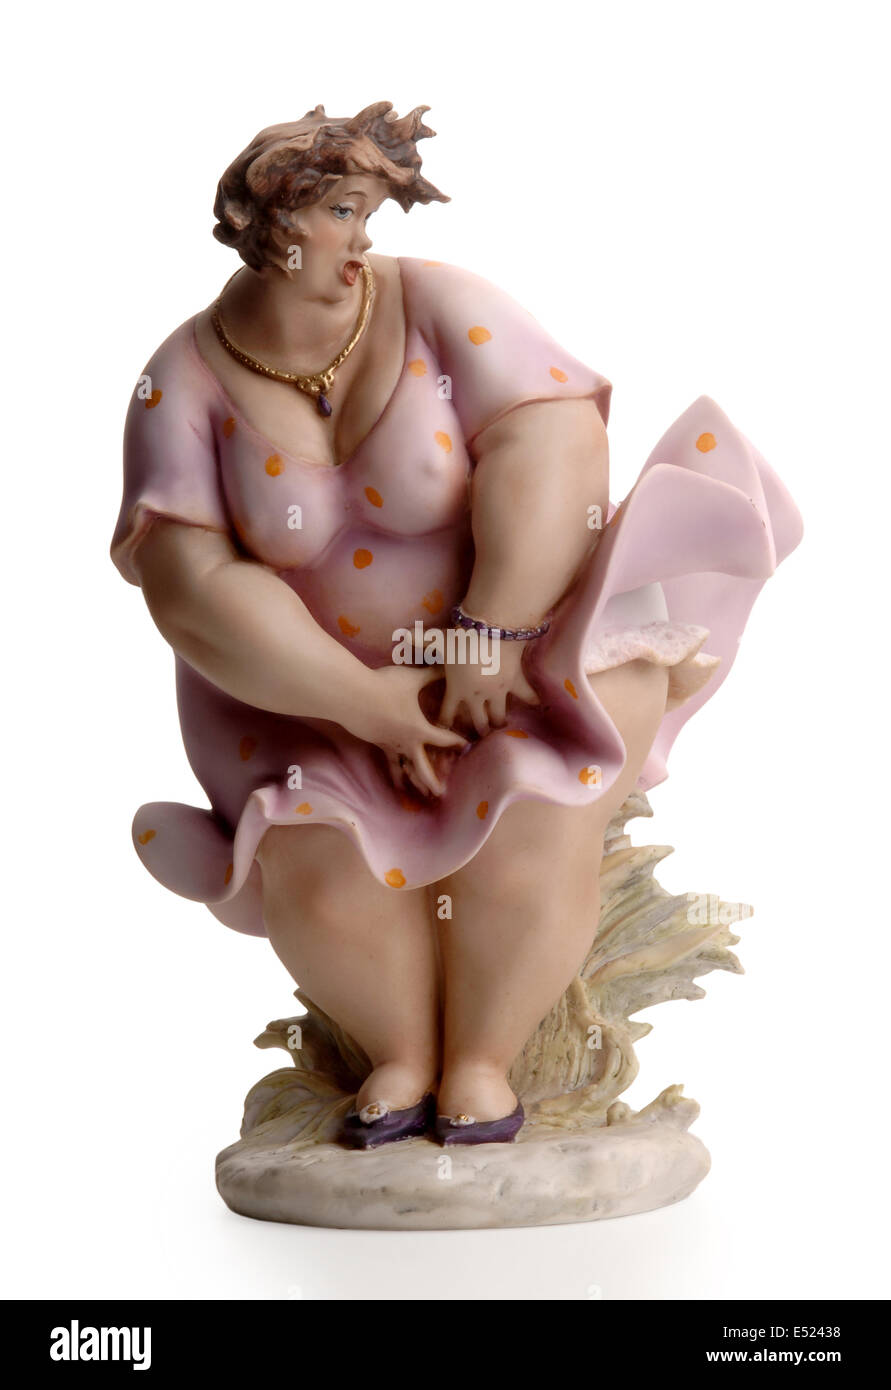 statuette of fat woman Stock Photo